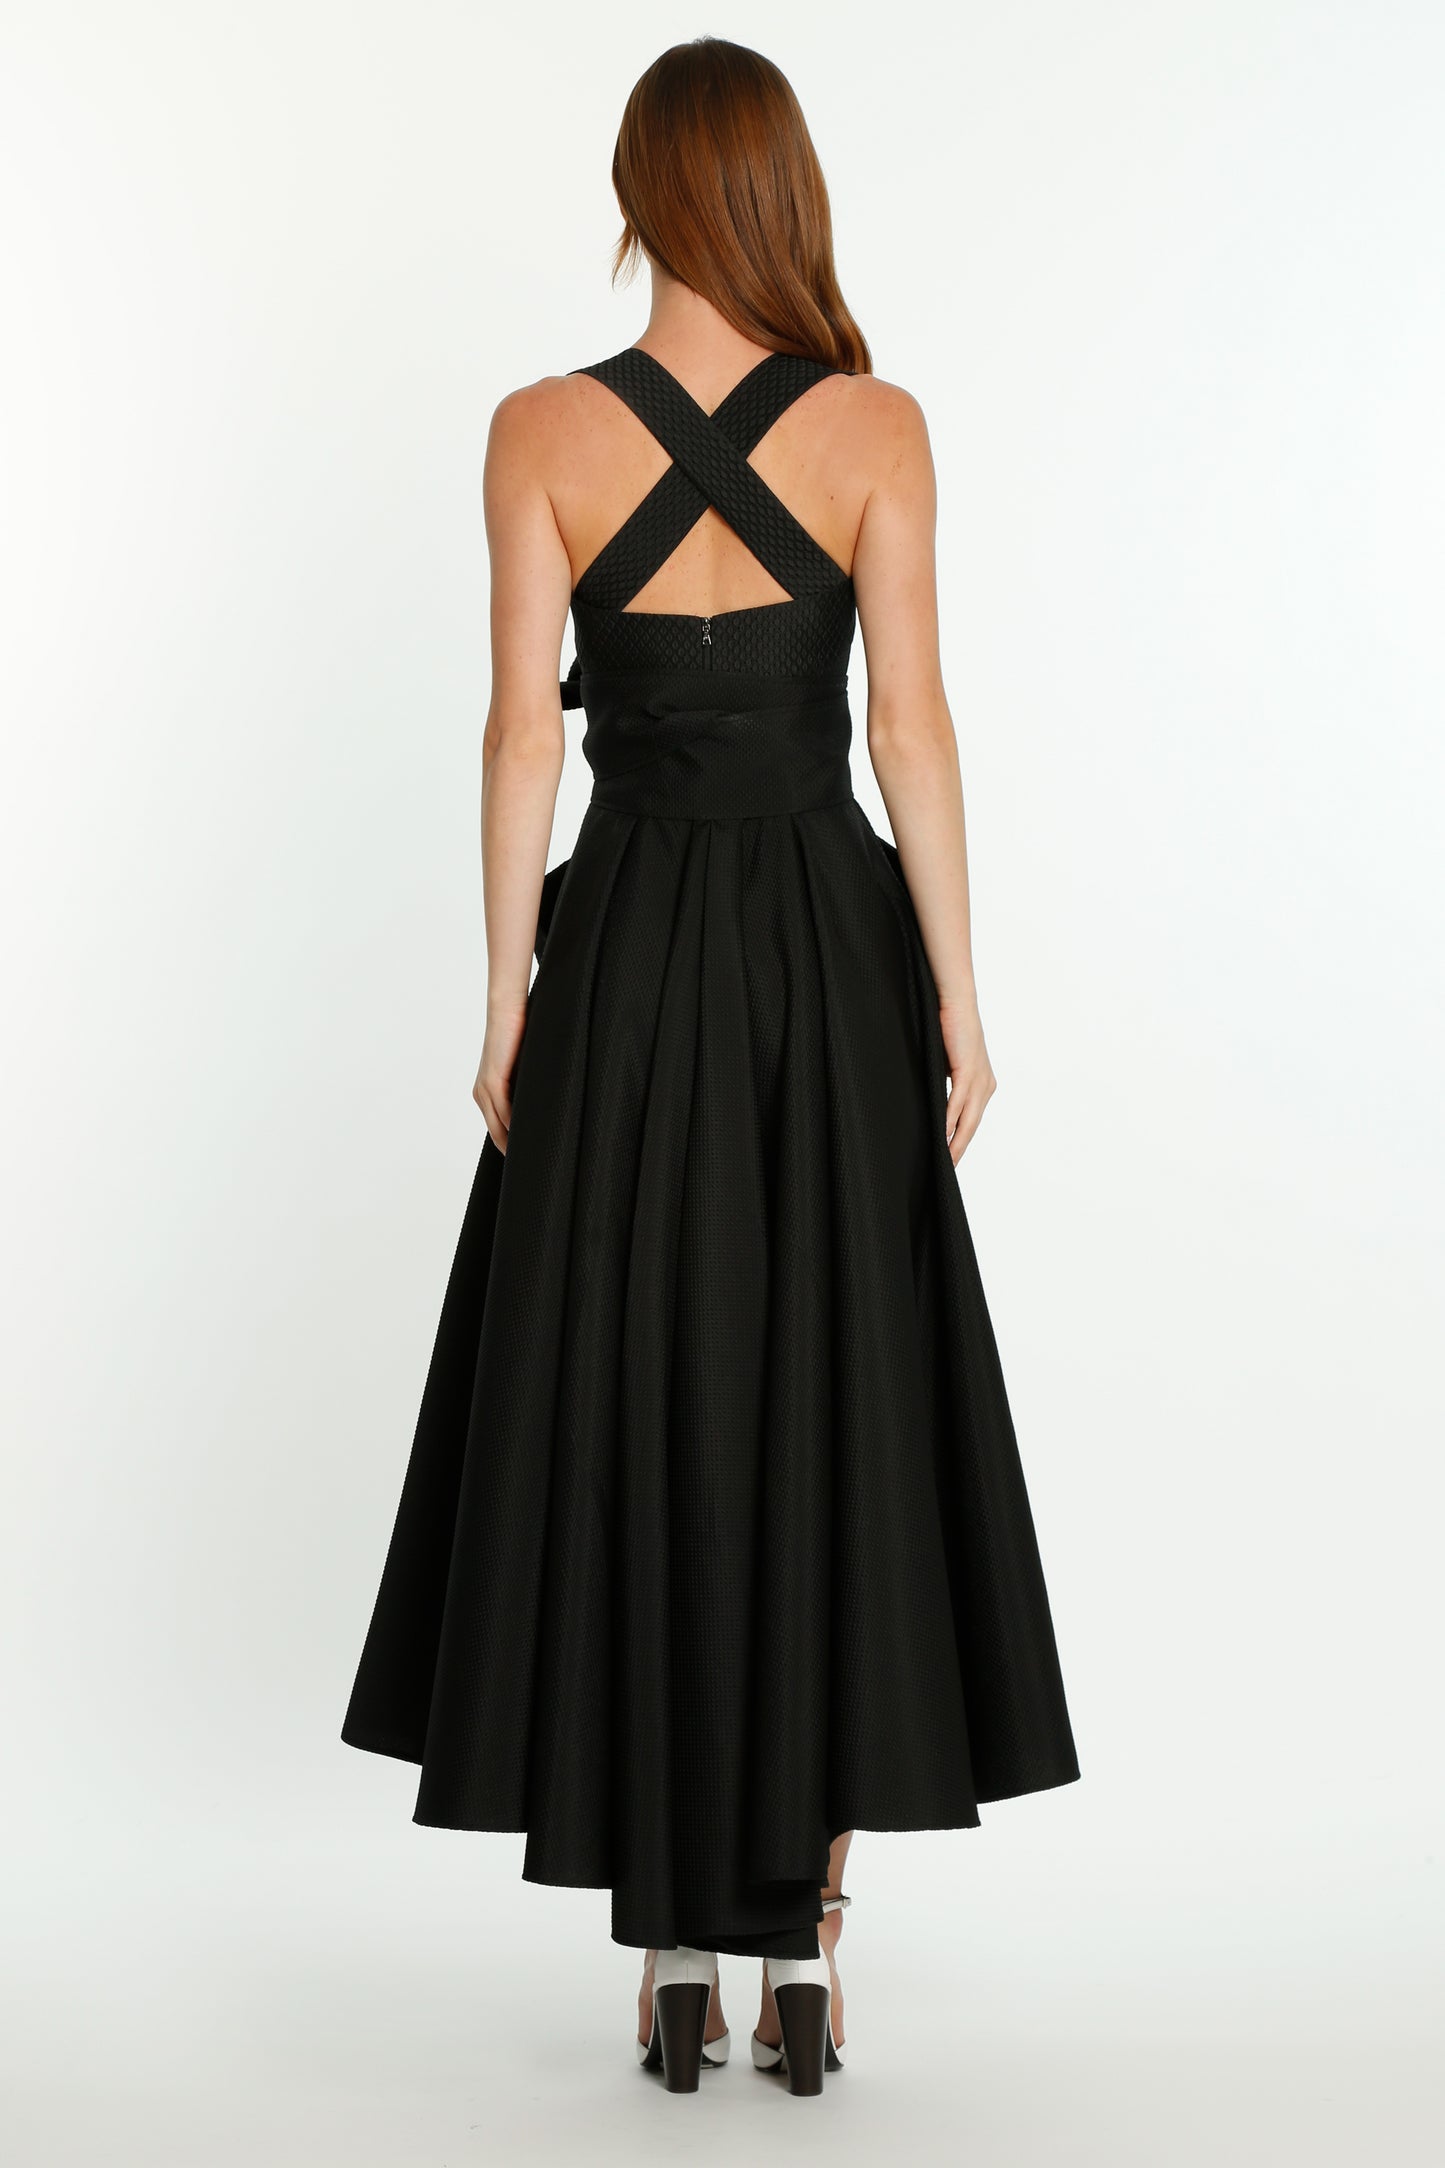 Black Cross-Back Corset Dress